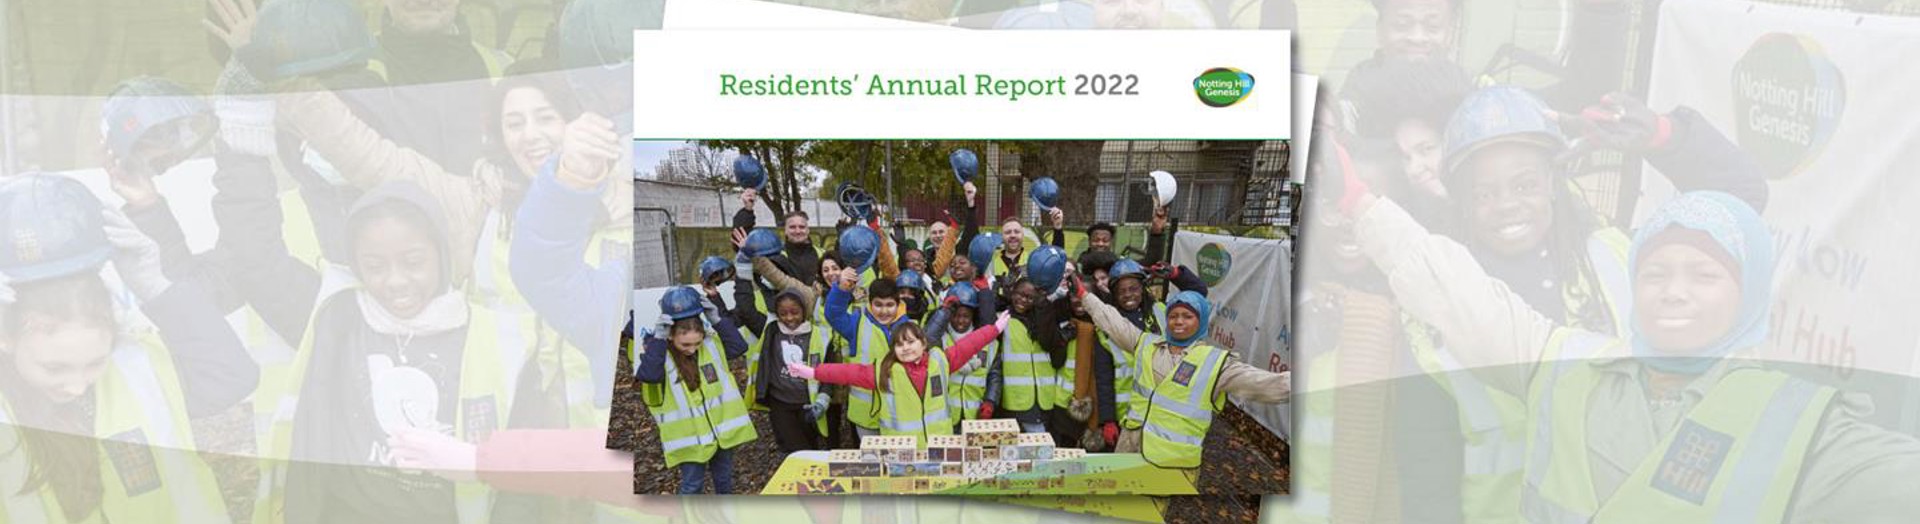 Resident Report 2022 Nhg